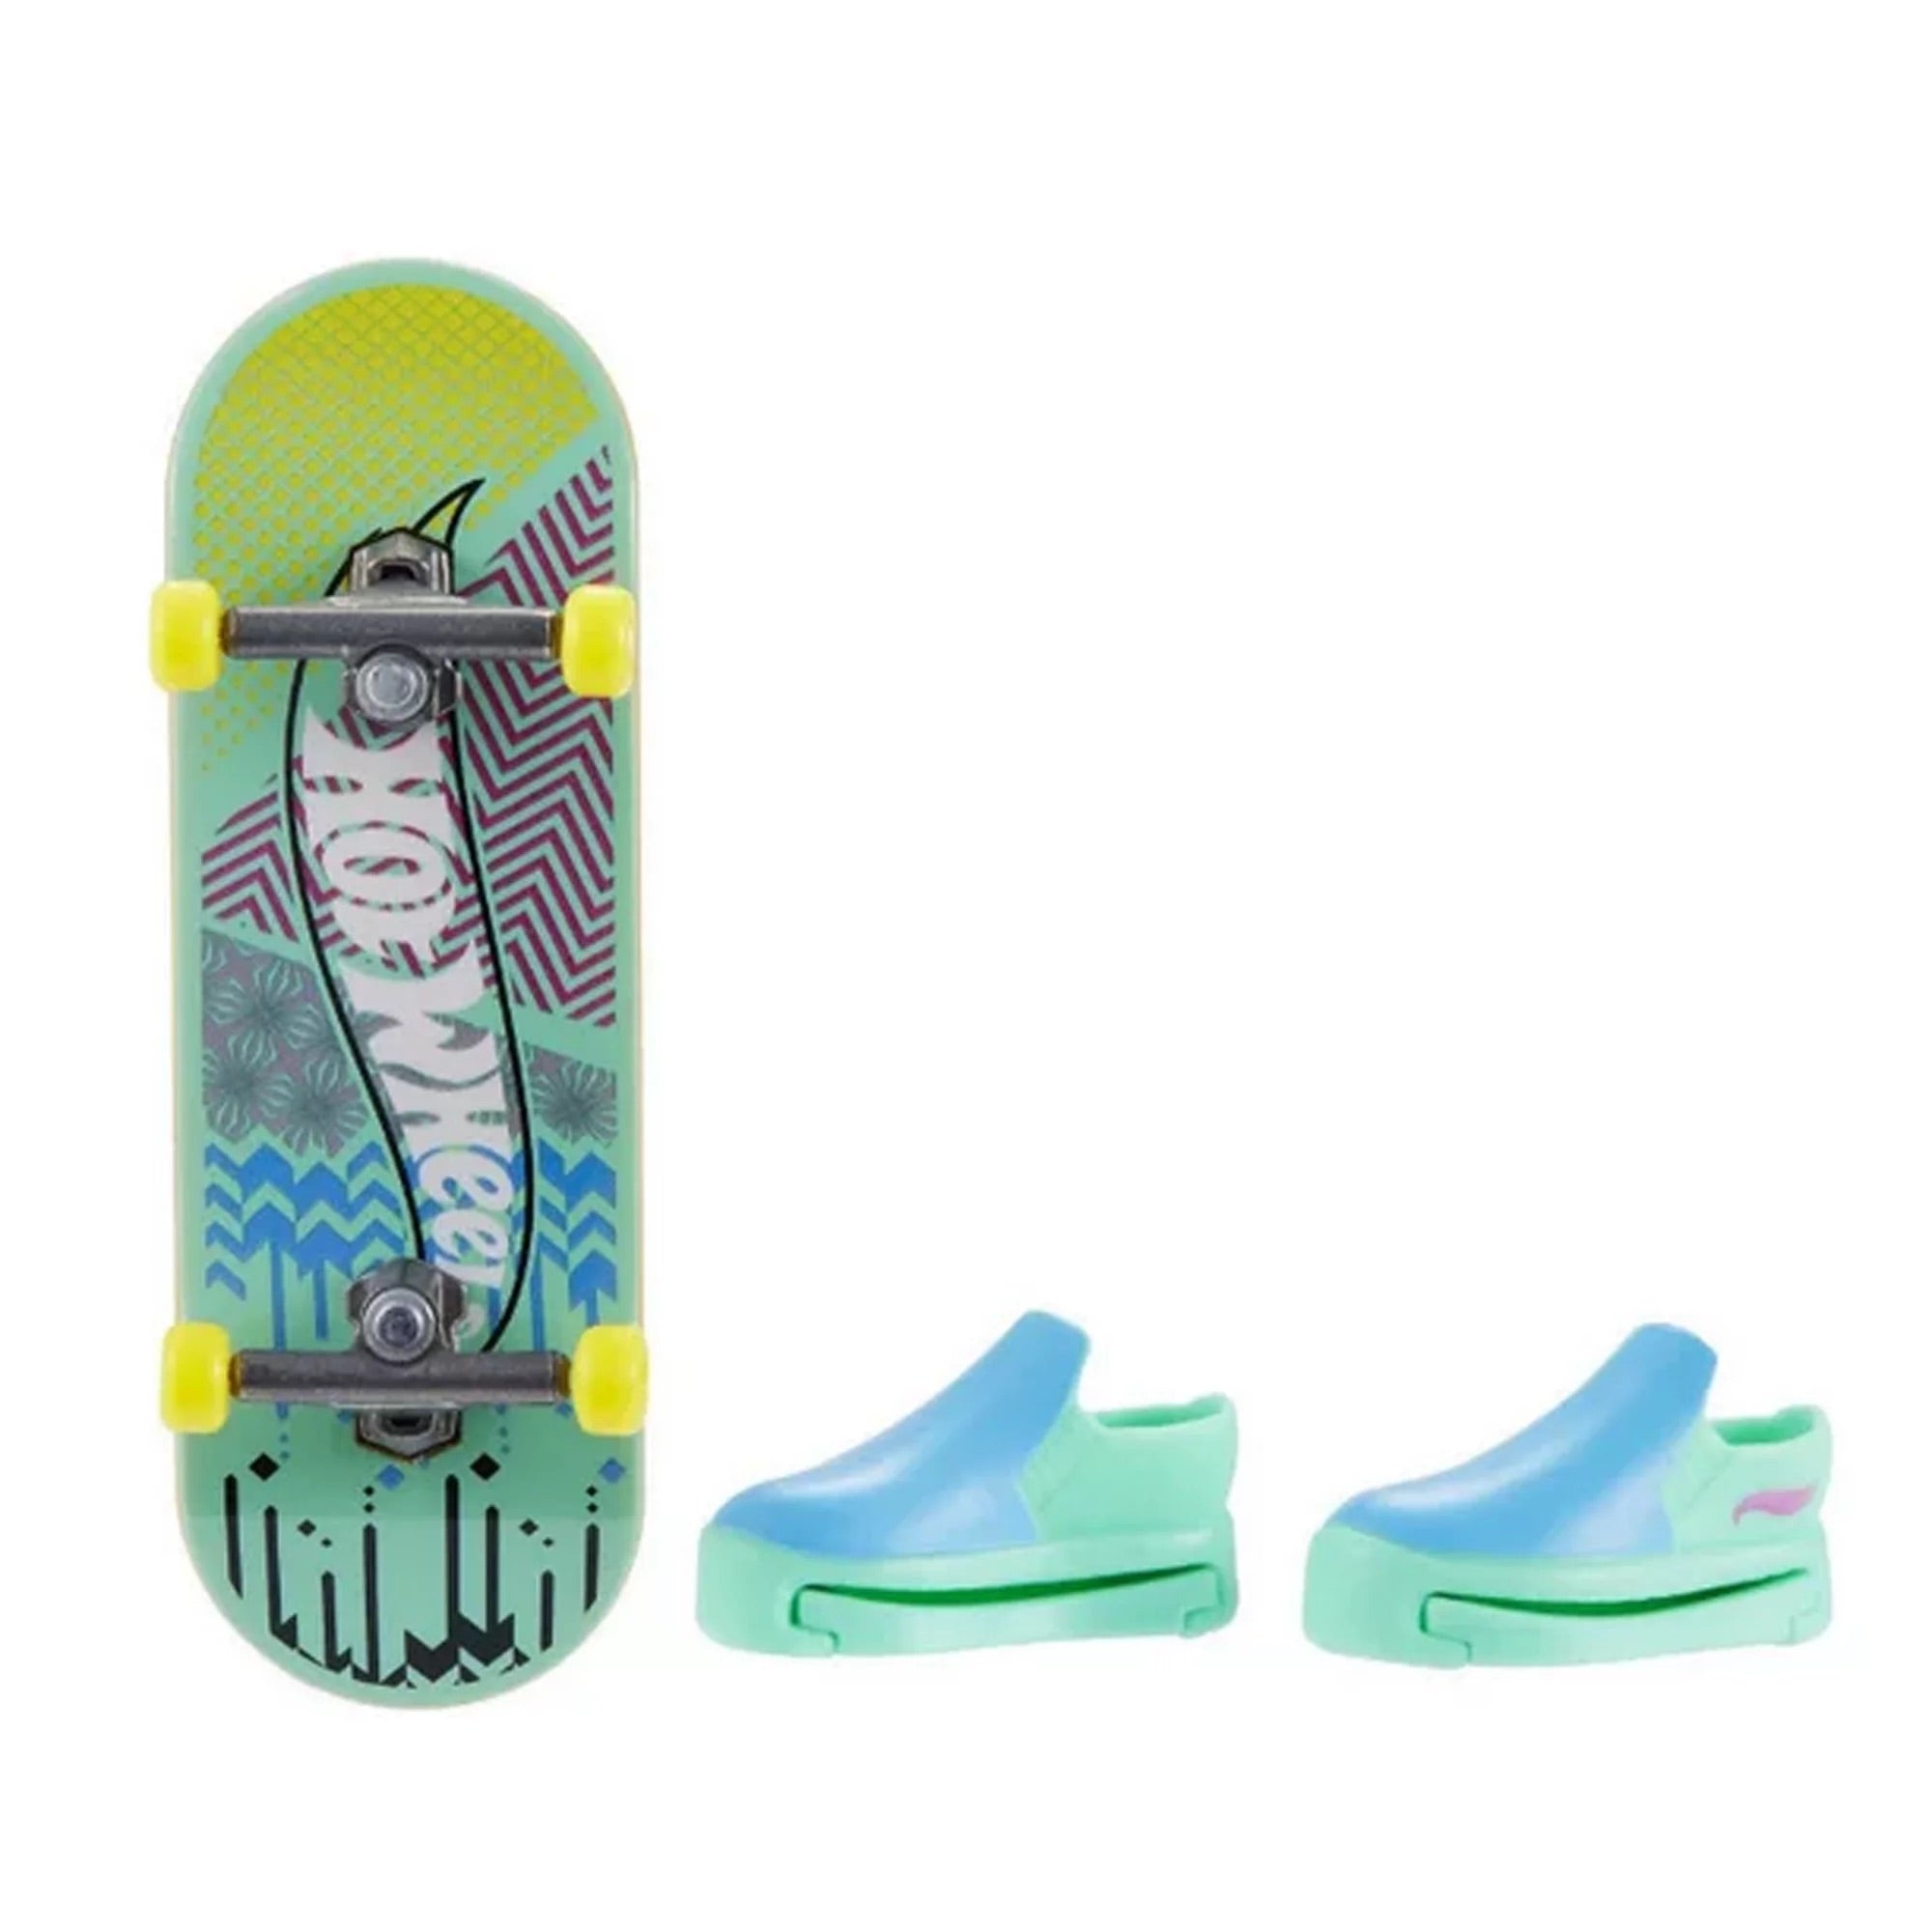 Hot Wheels Skate Tony Hawk Fingerboard & Skate Shoes - Ridin’ Vibes by Mattel #HGT46